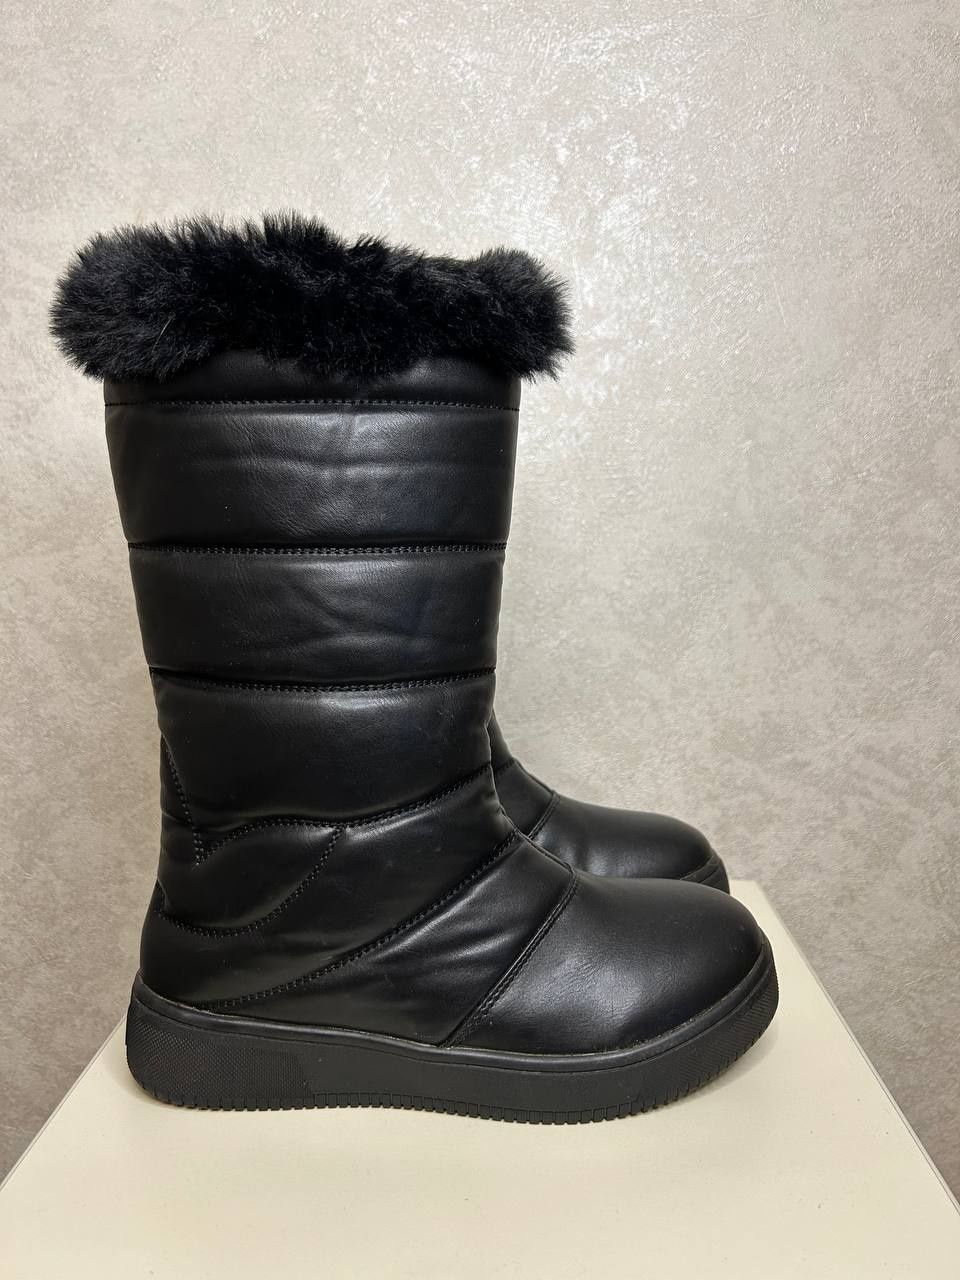 Женские зимние ботинки сапоги на меху размер 36